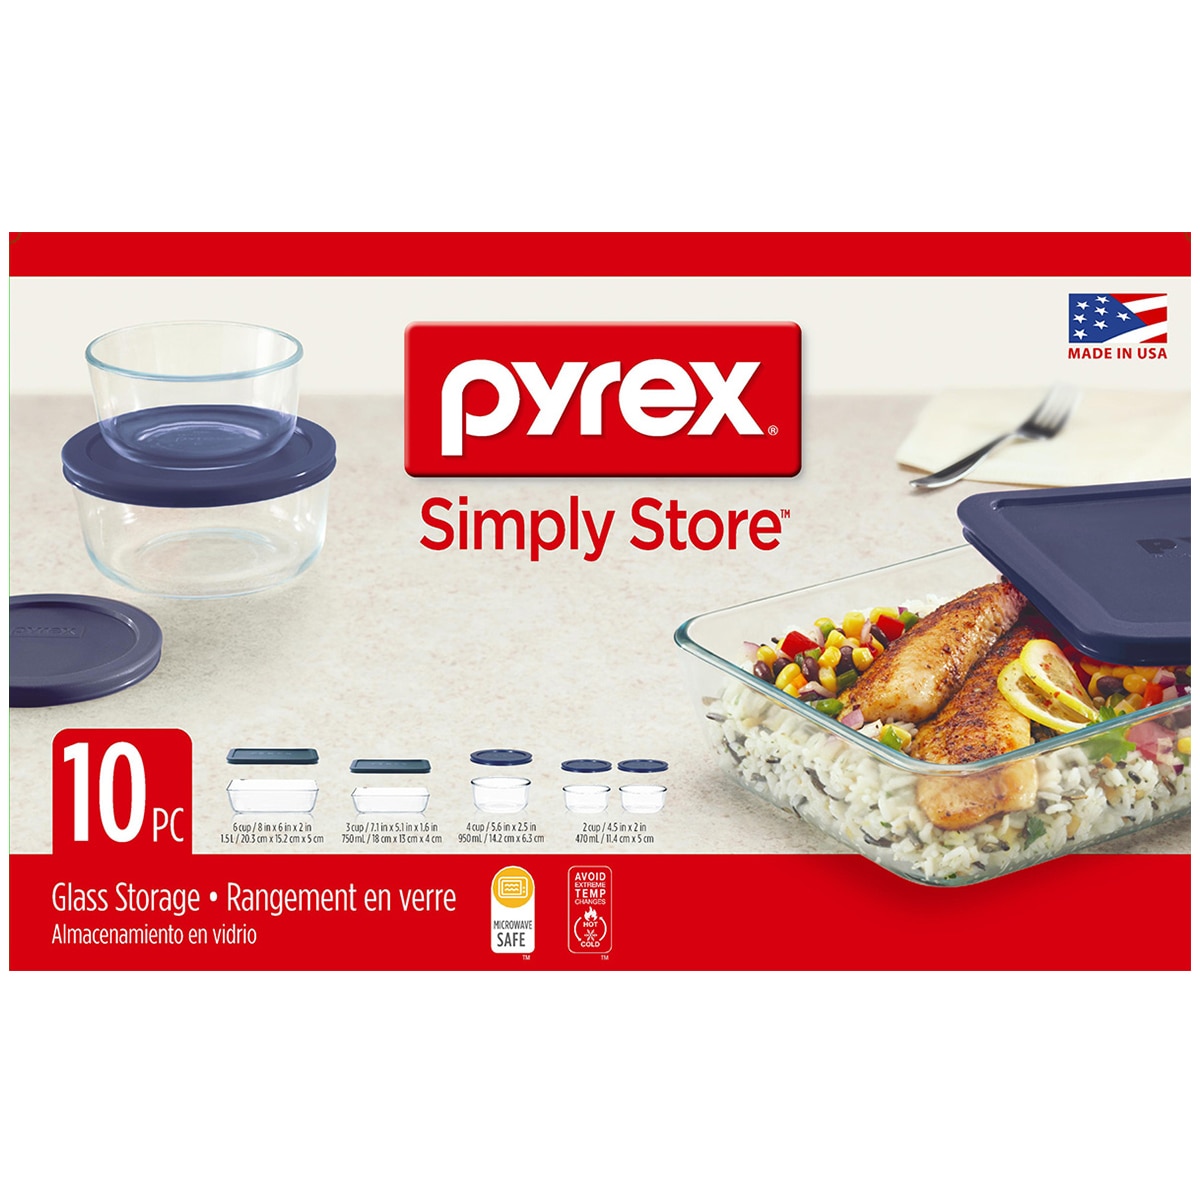 Pyrex Simply Store 10 piece Glass Food Storage